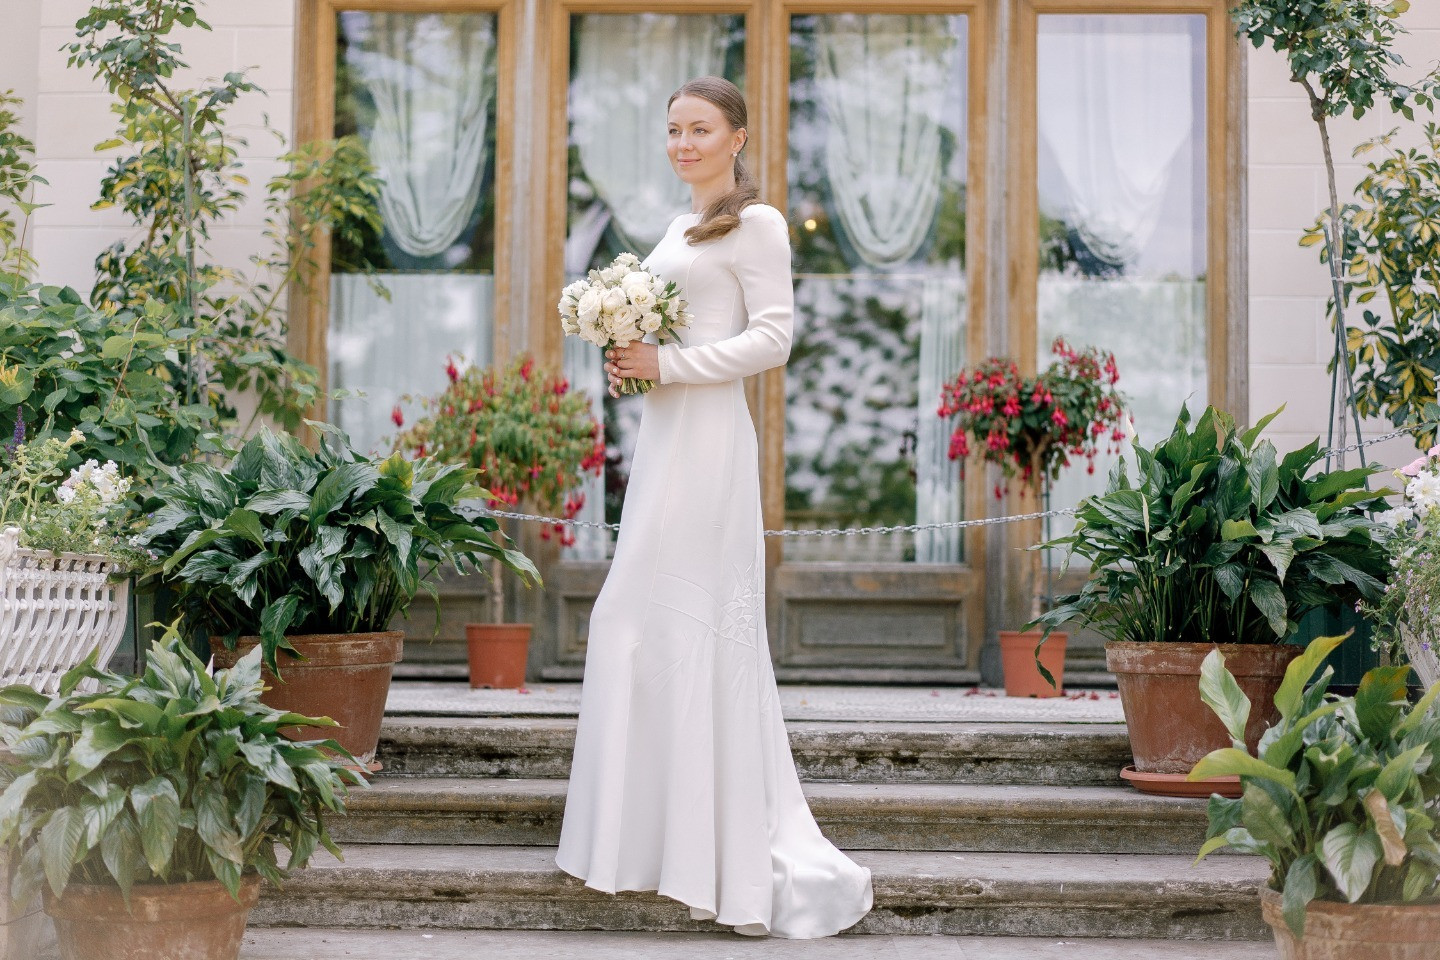 Simple Elegance: свадьба в нежном и лаконичном стиле